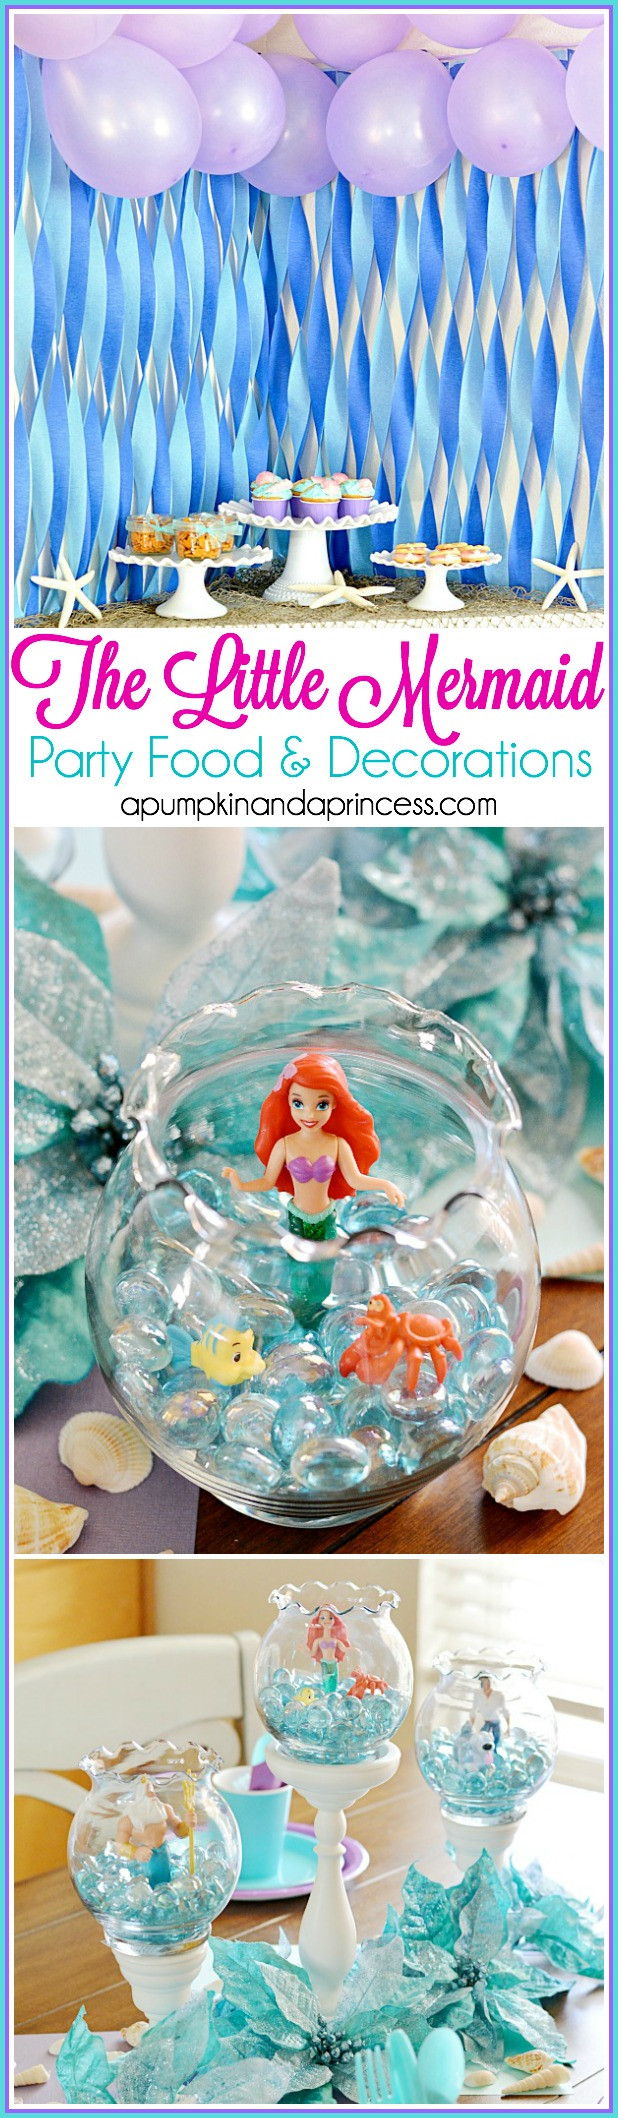 Mermaid Party Ideas
 The Little Mermaid Party A Pumpkin And A Princess